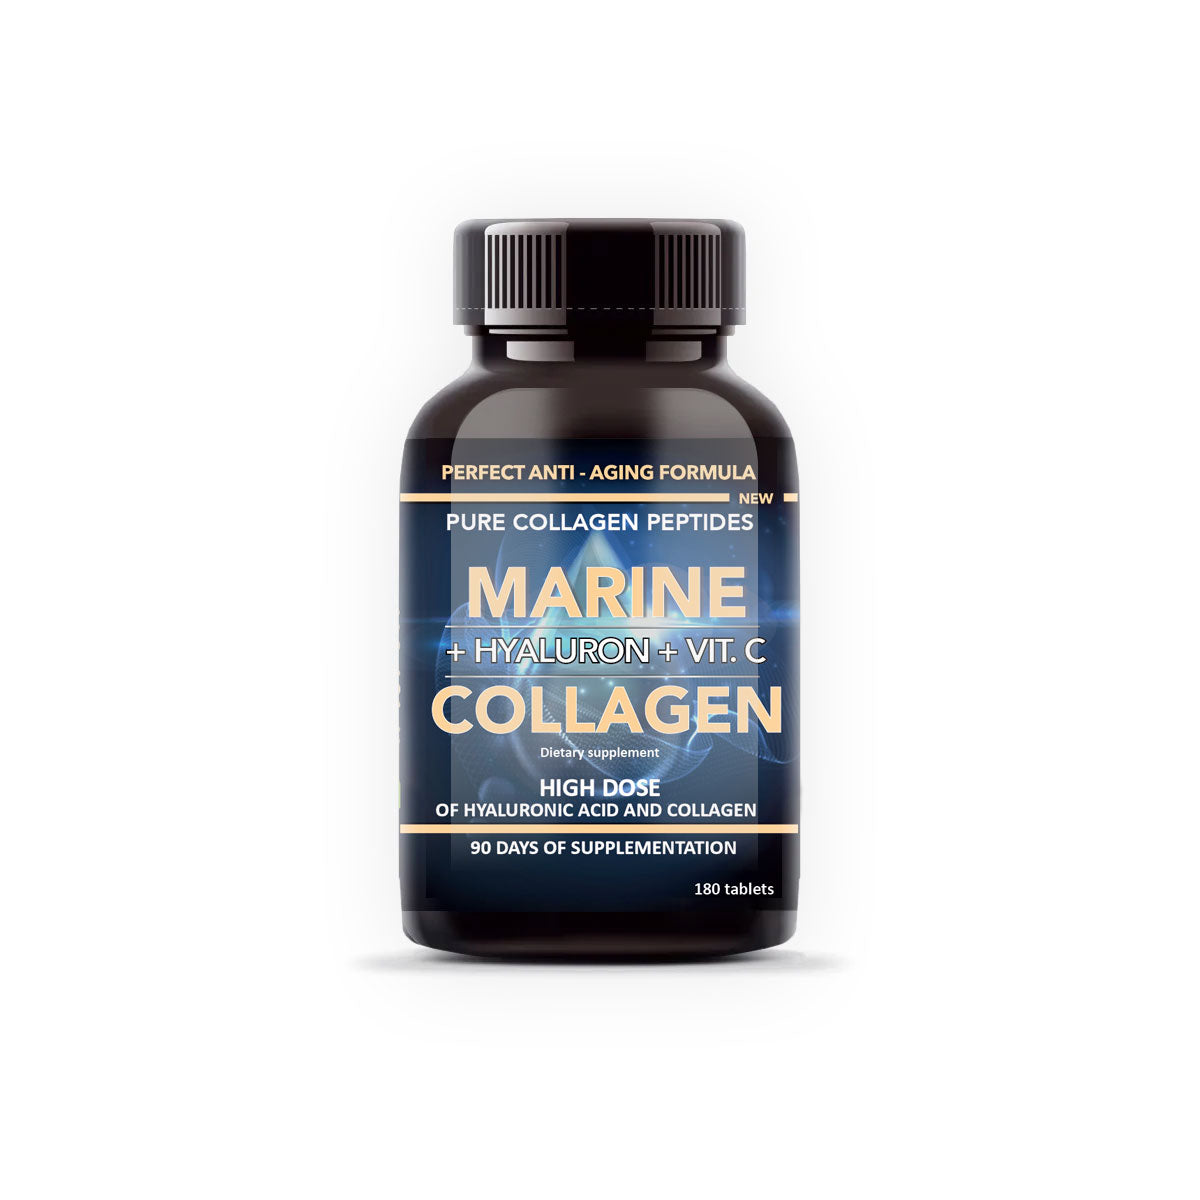 Marine collagen + hyaluron + vitamin C 500 mg tablets – 90 tablets